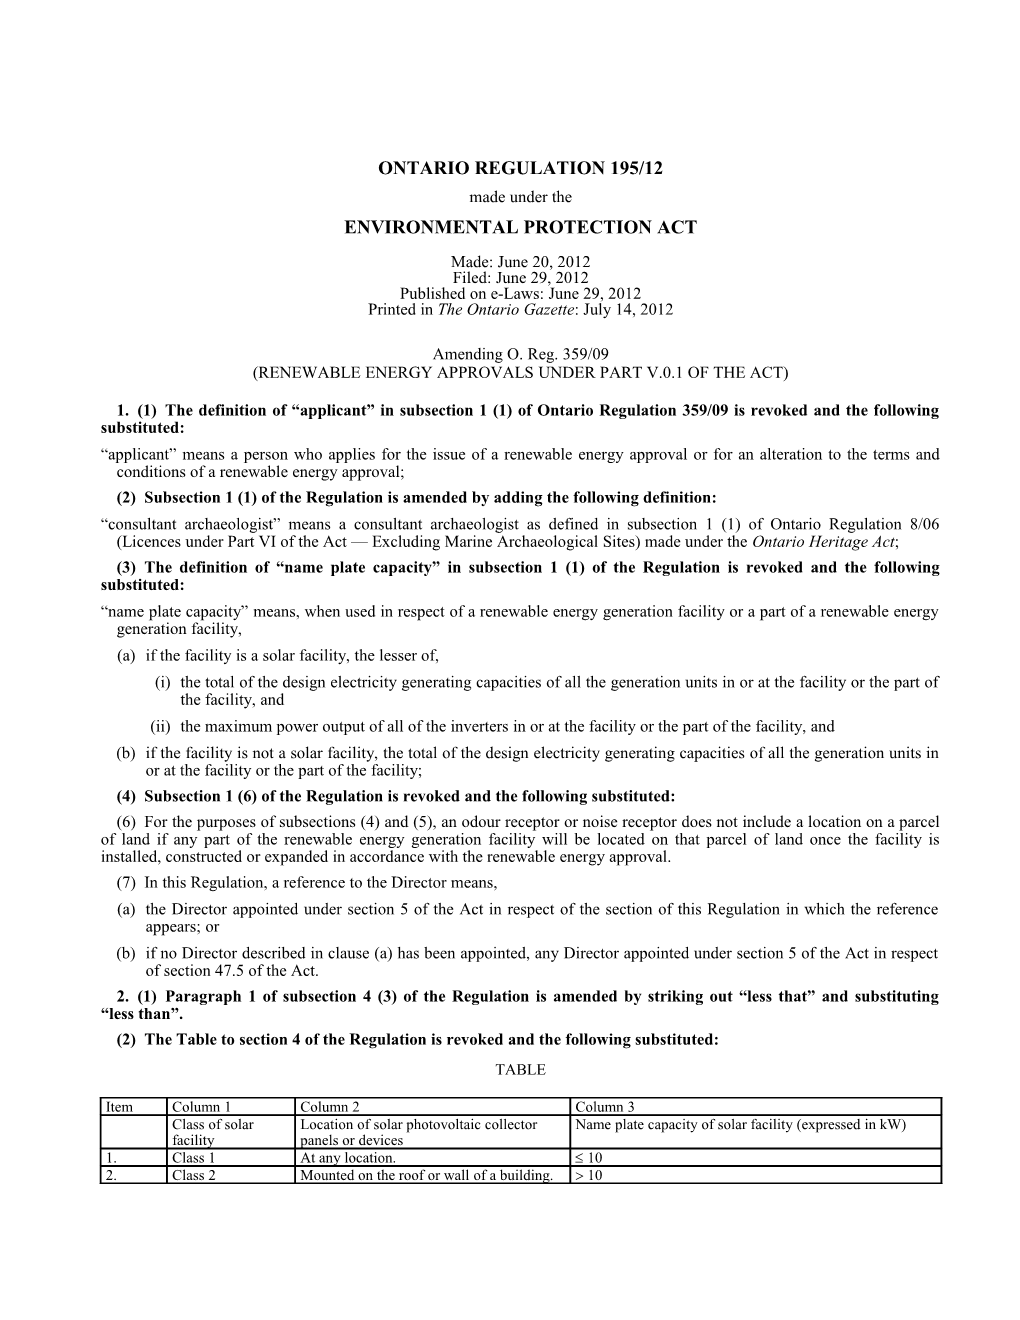 ENVIRONMENTAL PROTECTION ACT - O. Reg. 195/12